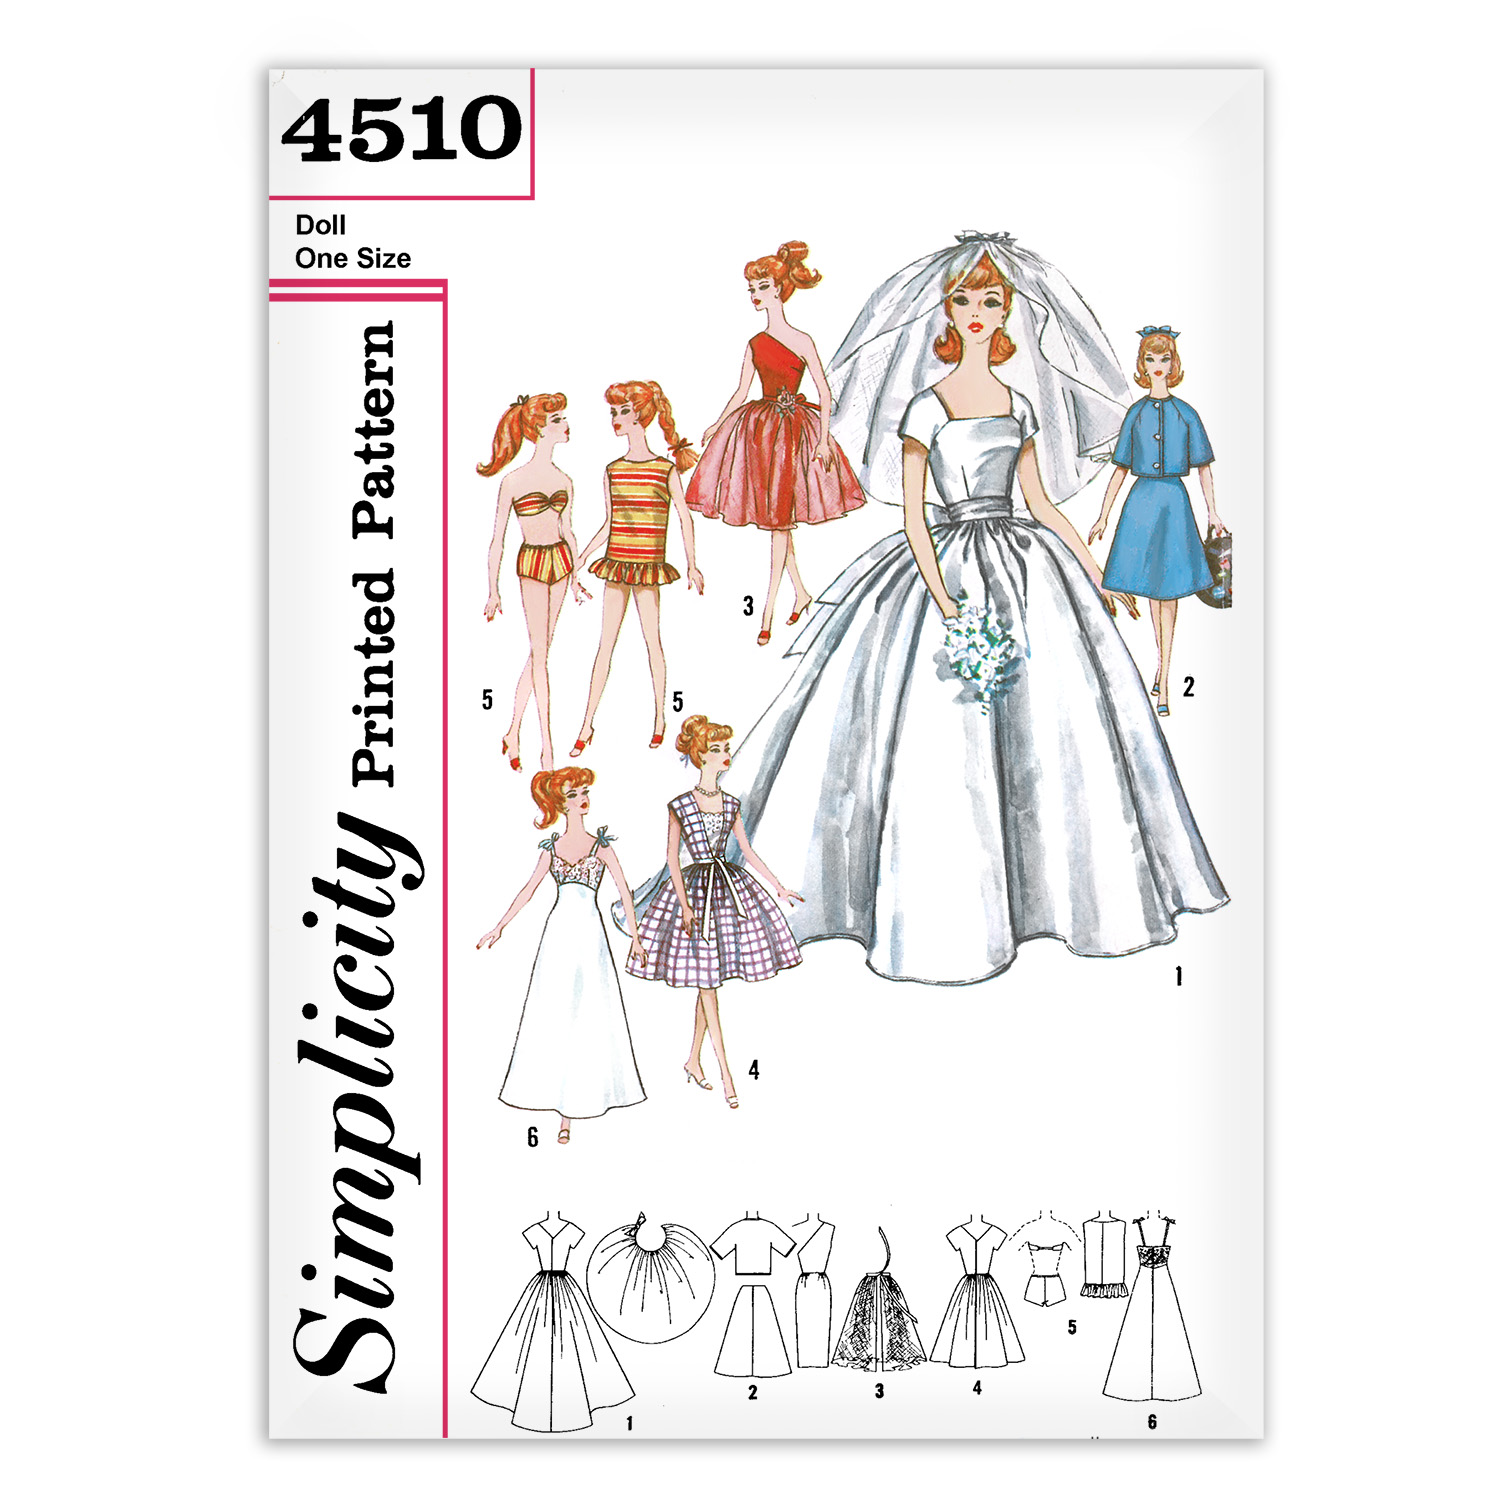 Skipper Barbie Doll Clothing Sewing Pattern McCalls 7716 - Vintage